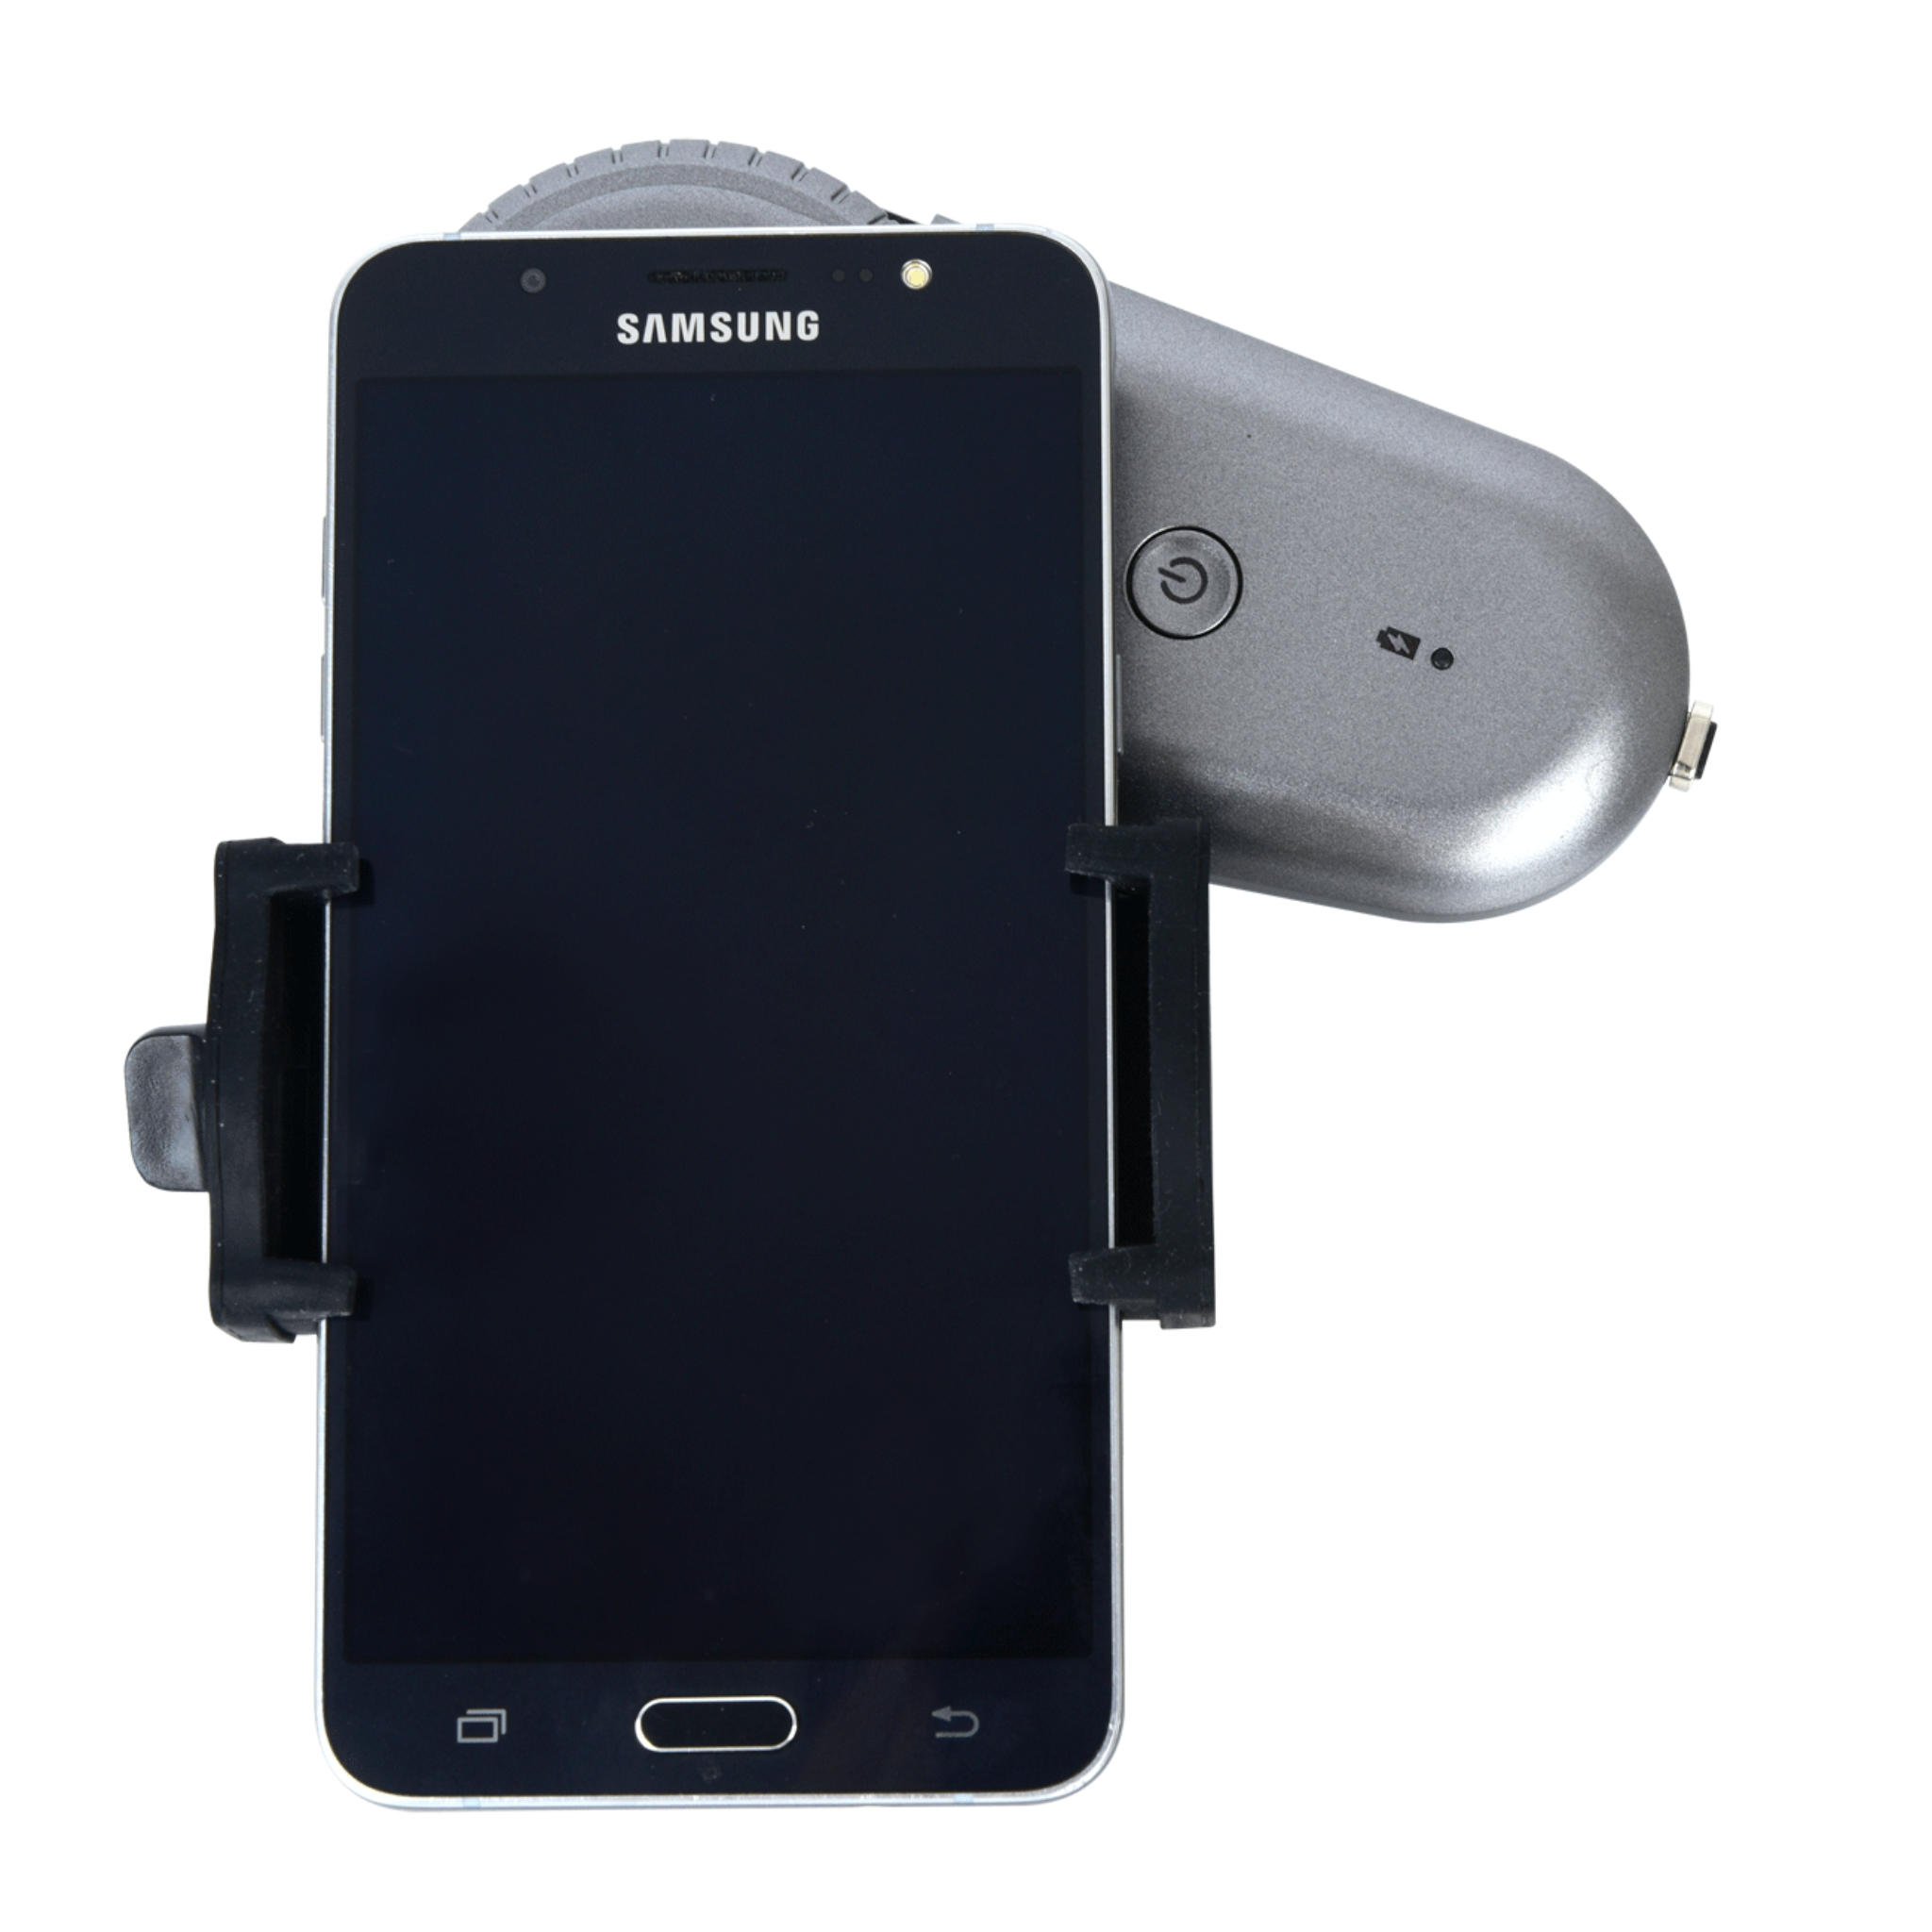 Illuco Universal Smartphone Adapter with Samsung Phone